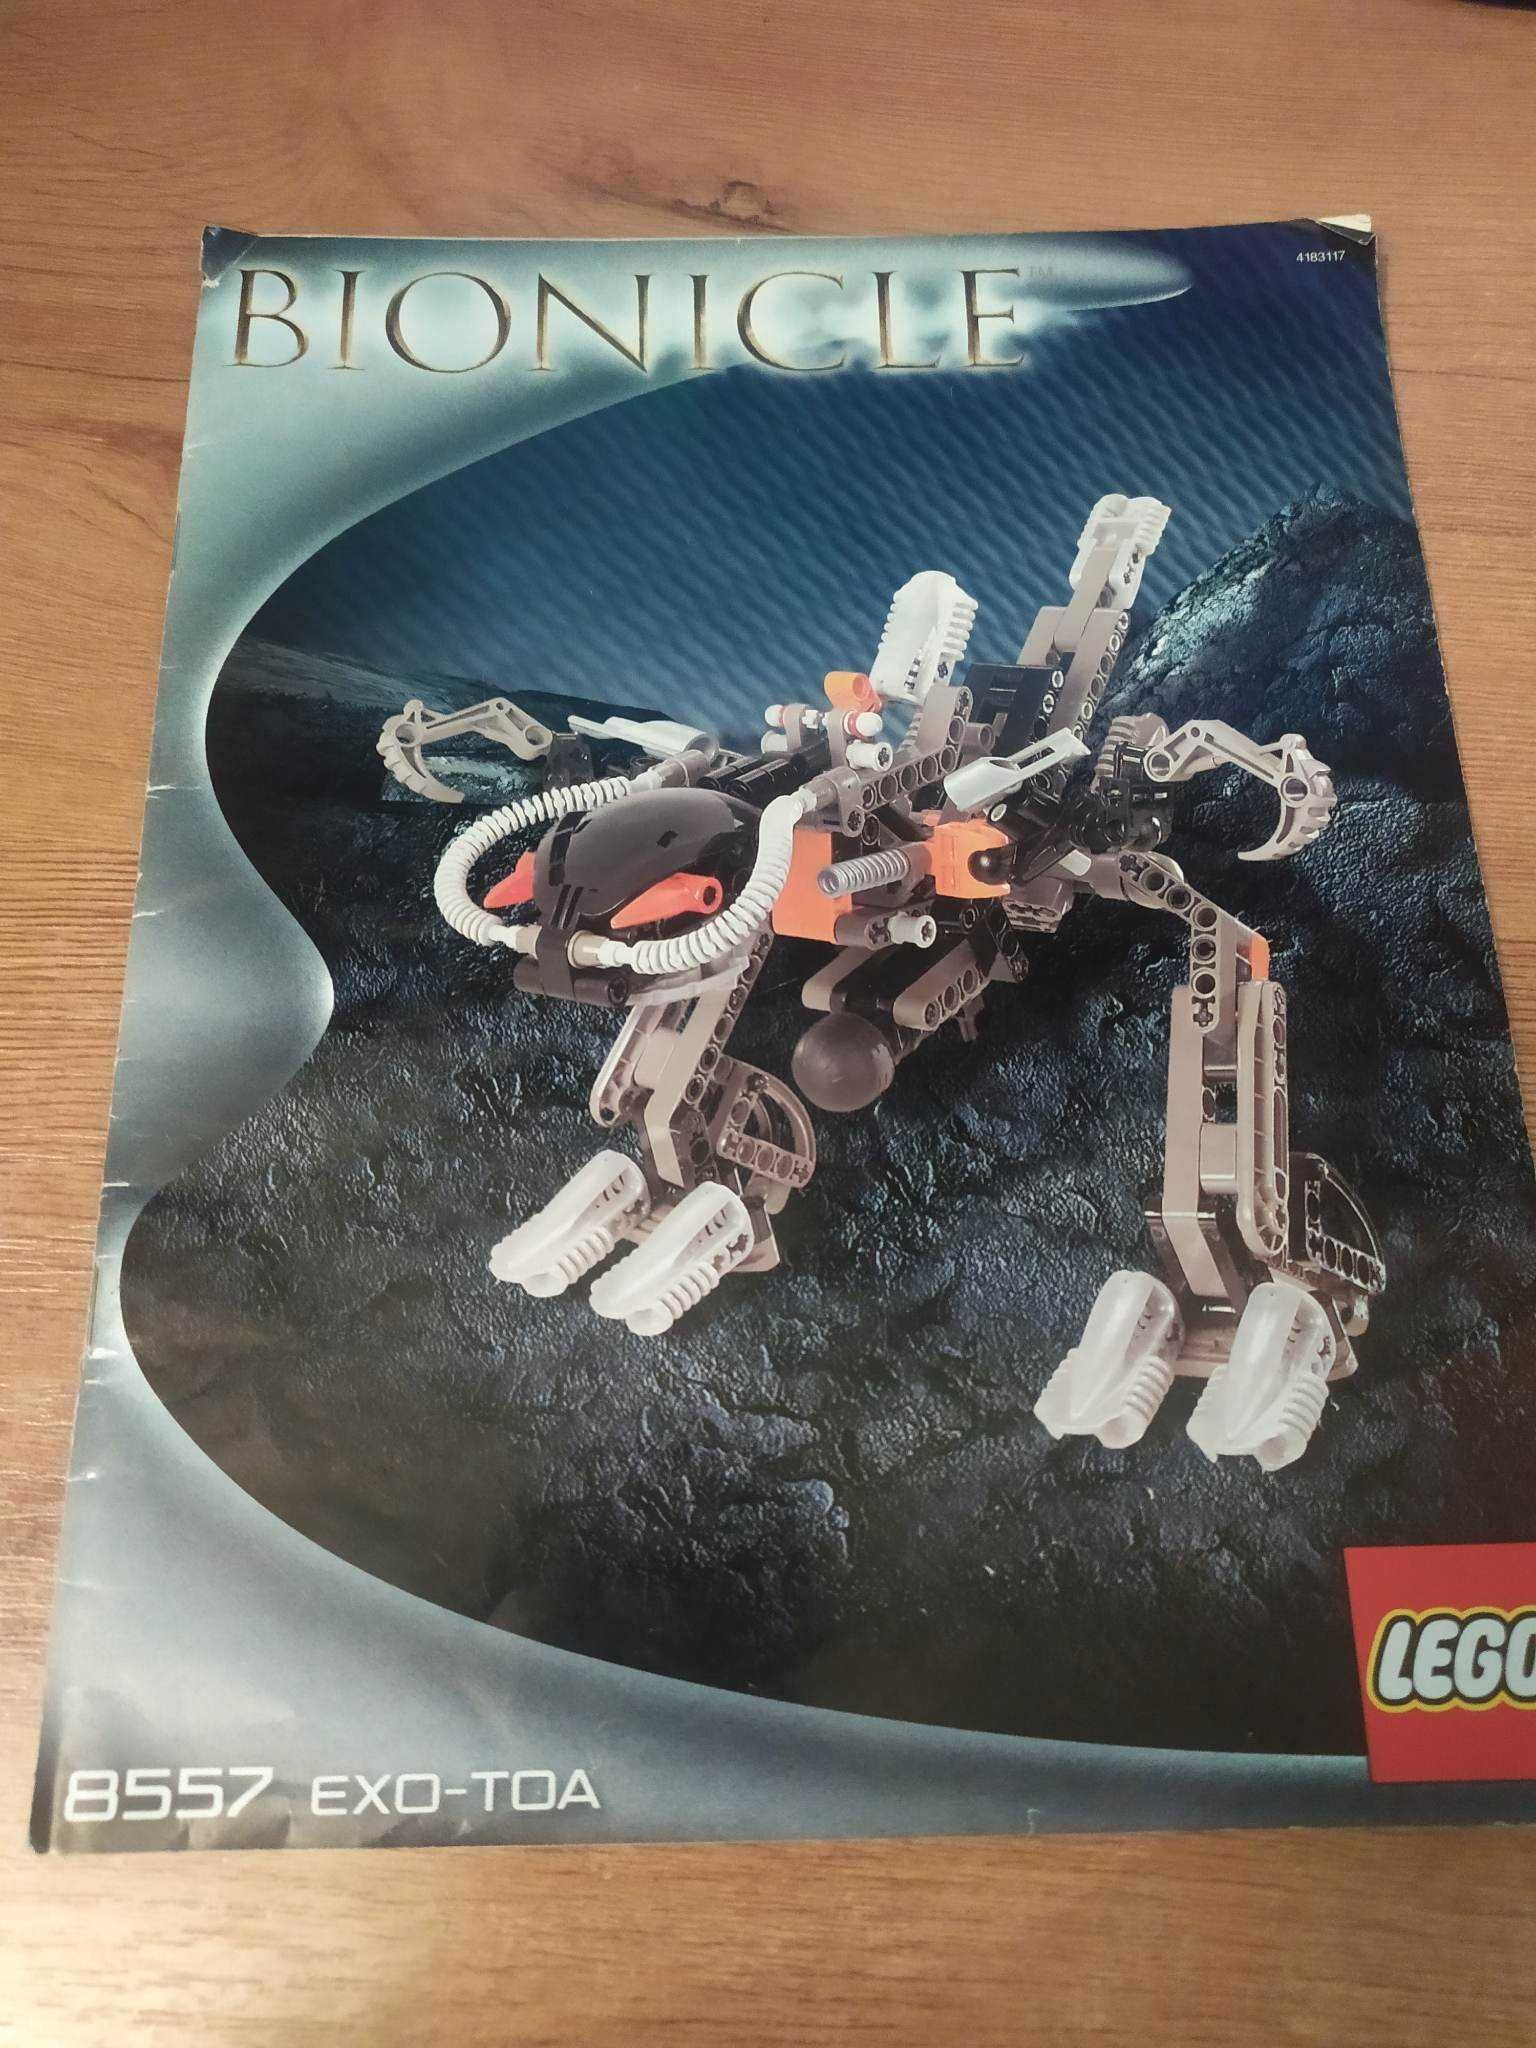 Lego Bionicle 8557 Exo-Toa instrukcje